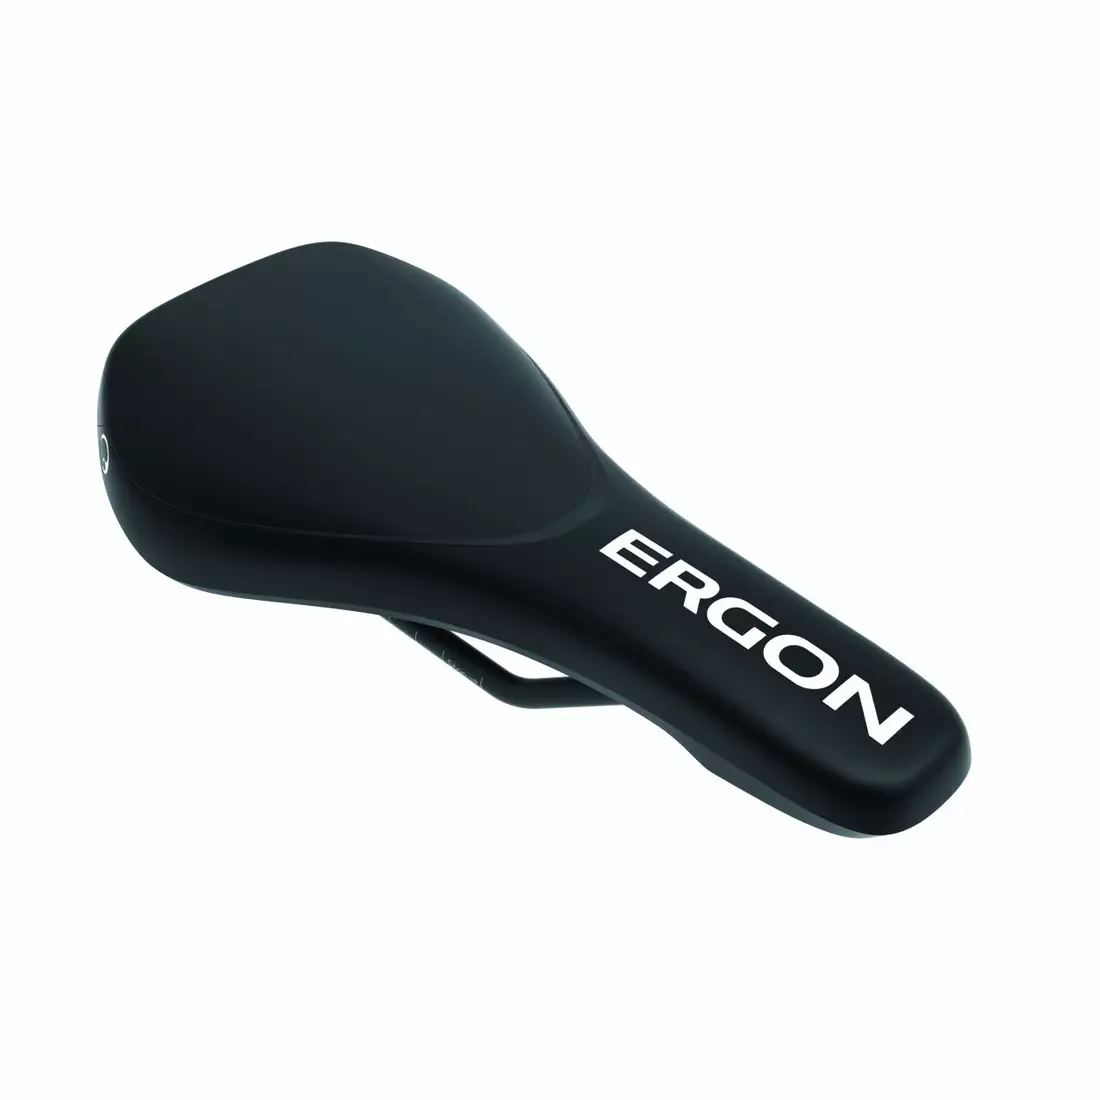 ERGON SM DOWNHILL COMP downhill bike saddle, black